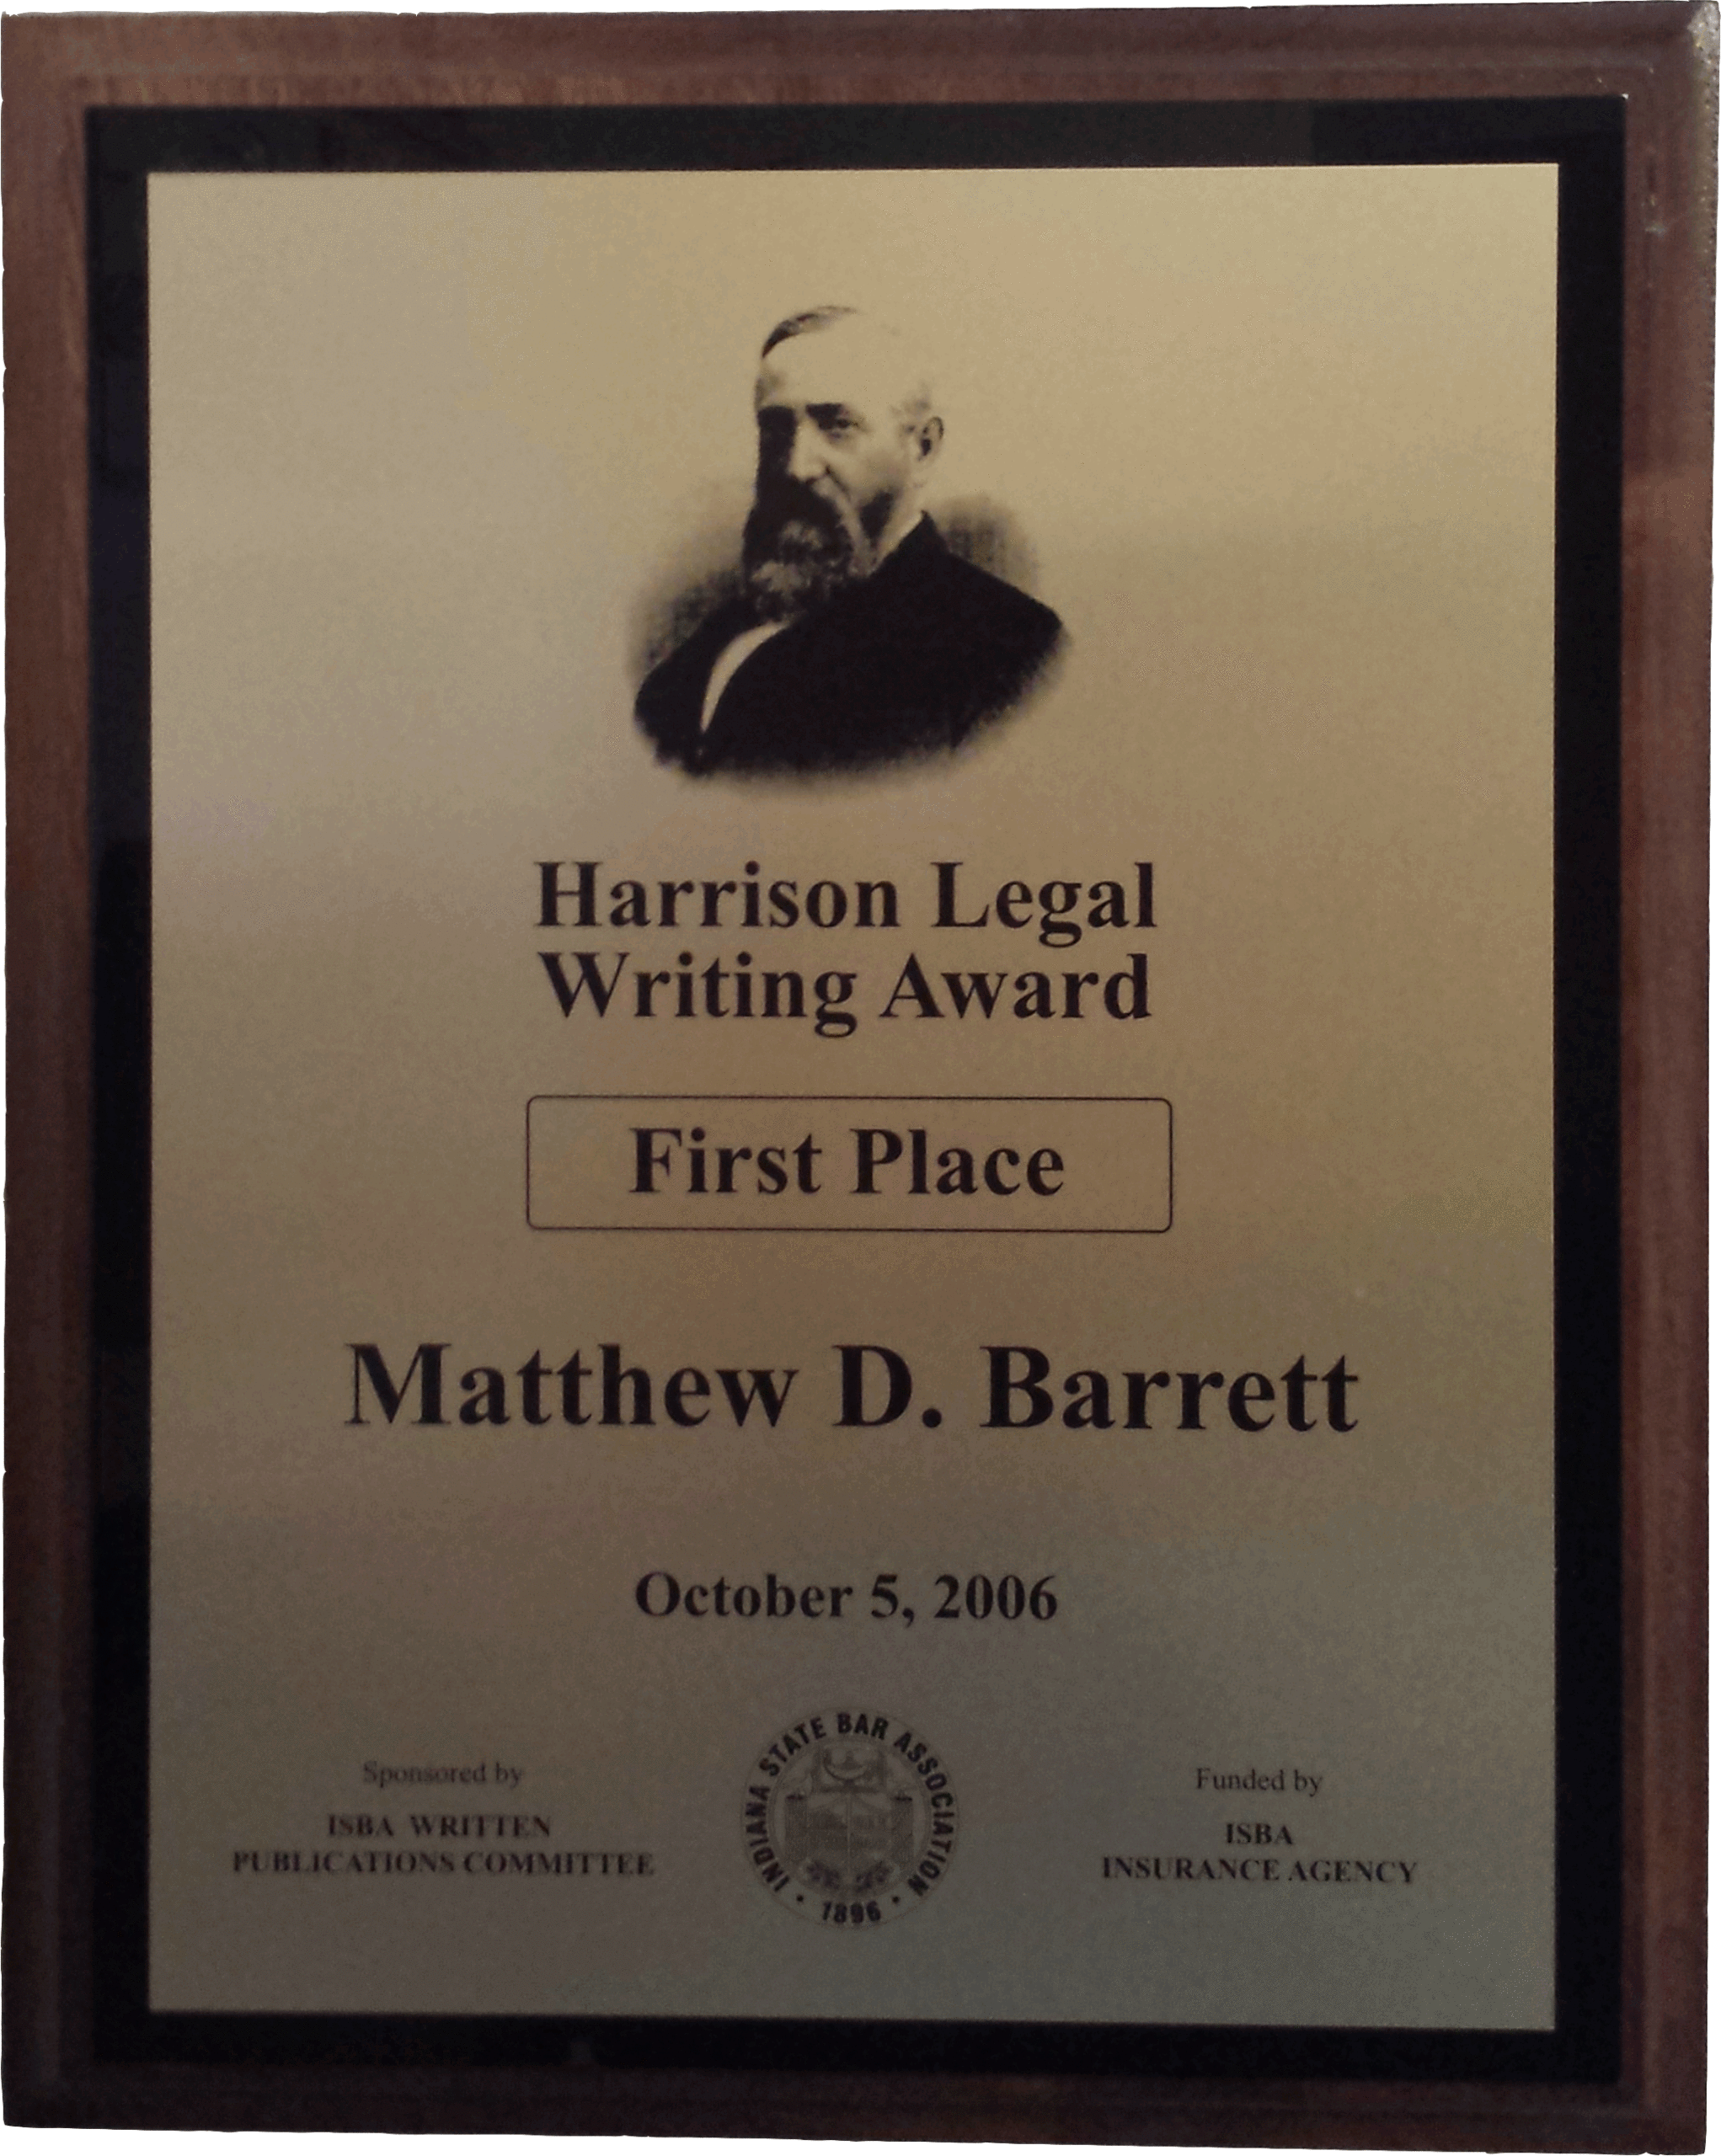 Harrison Legal Writing Award